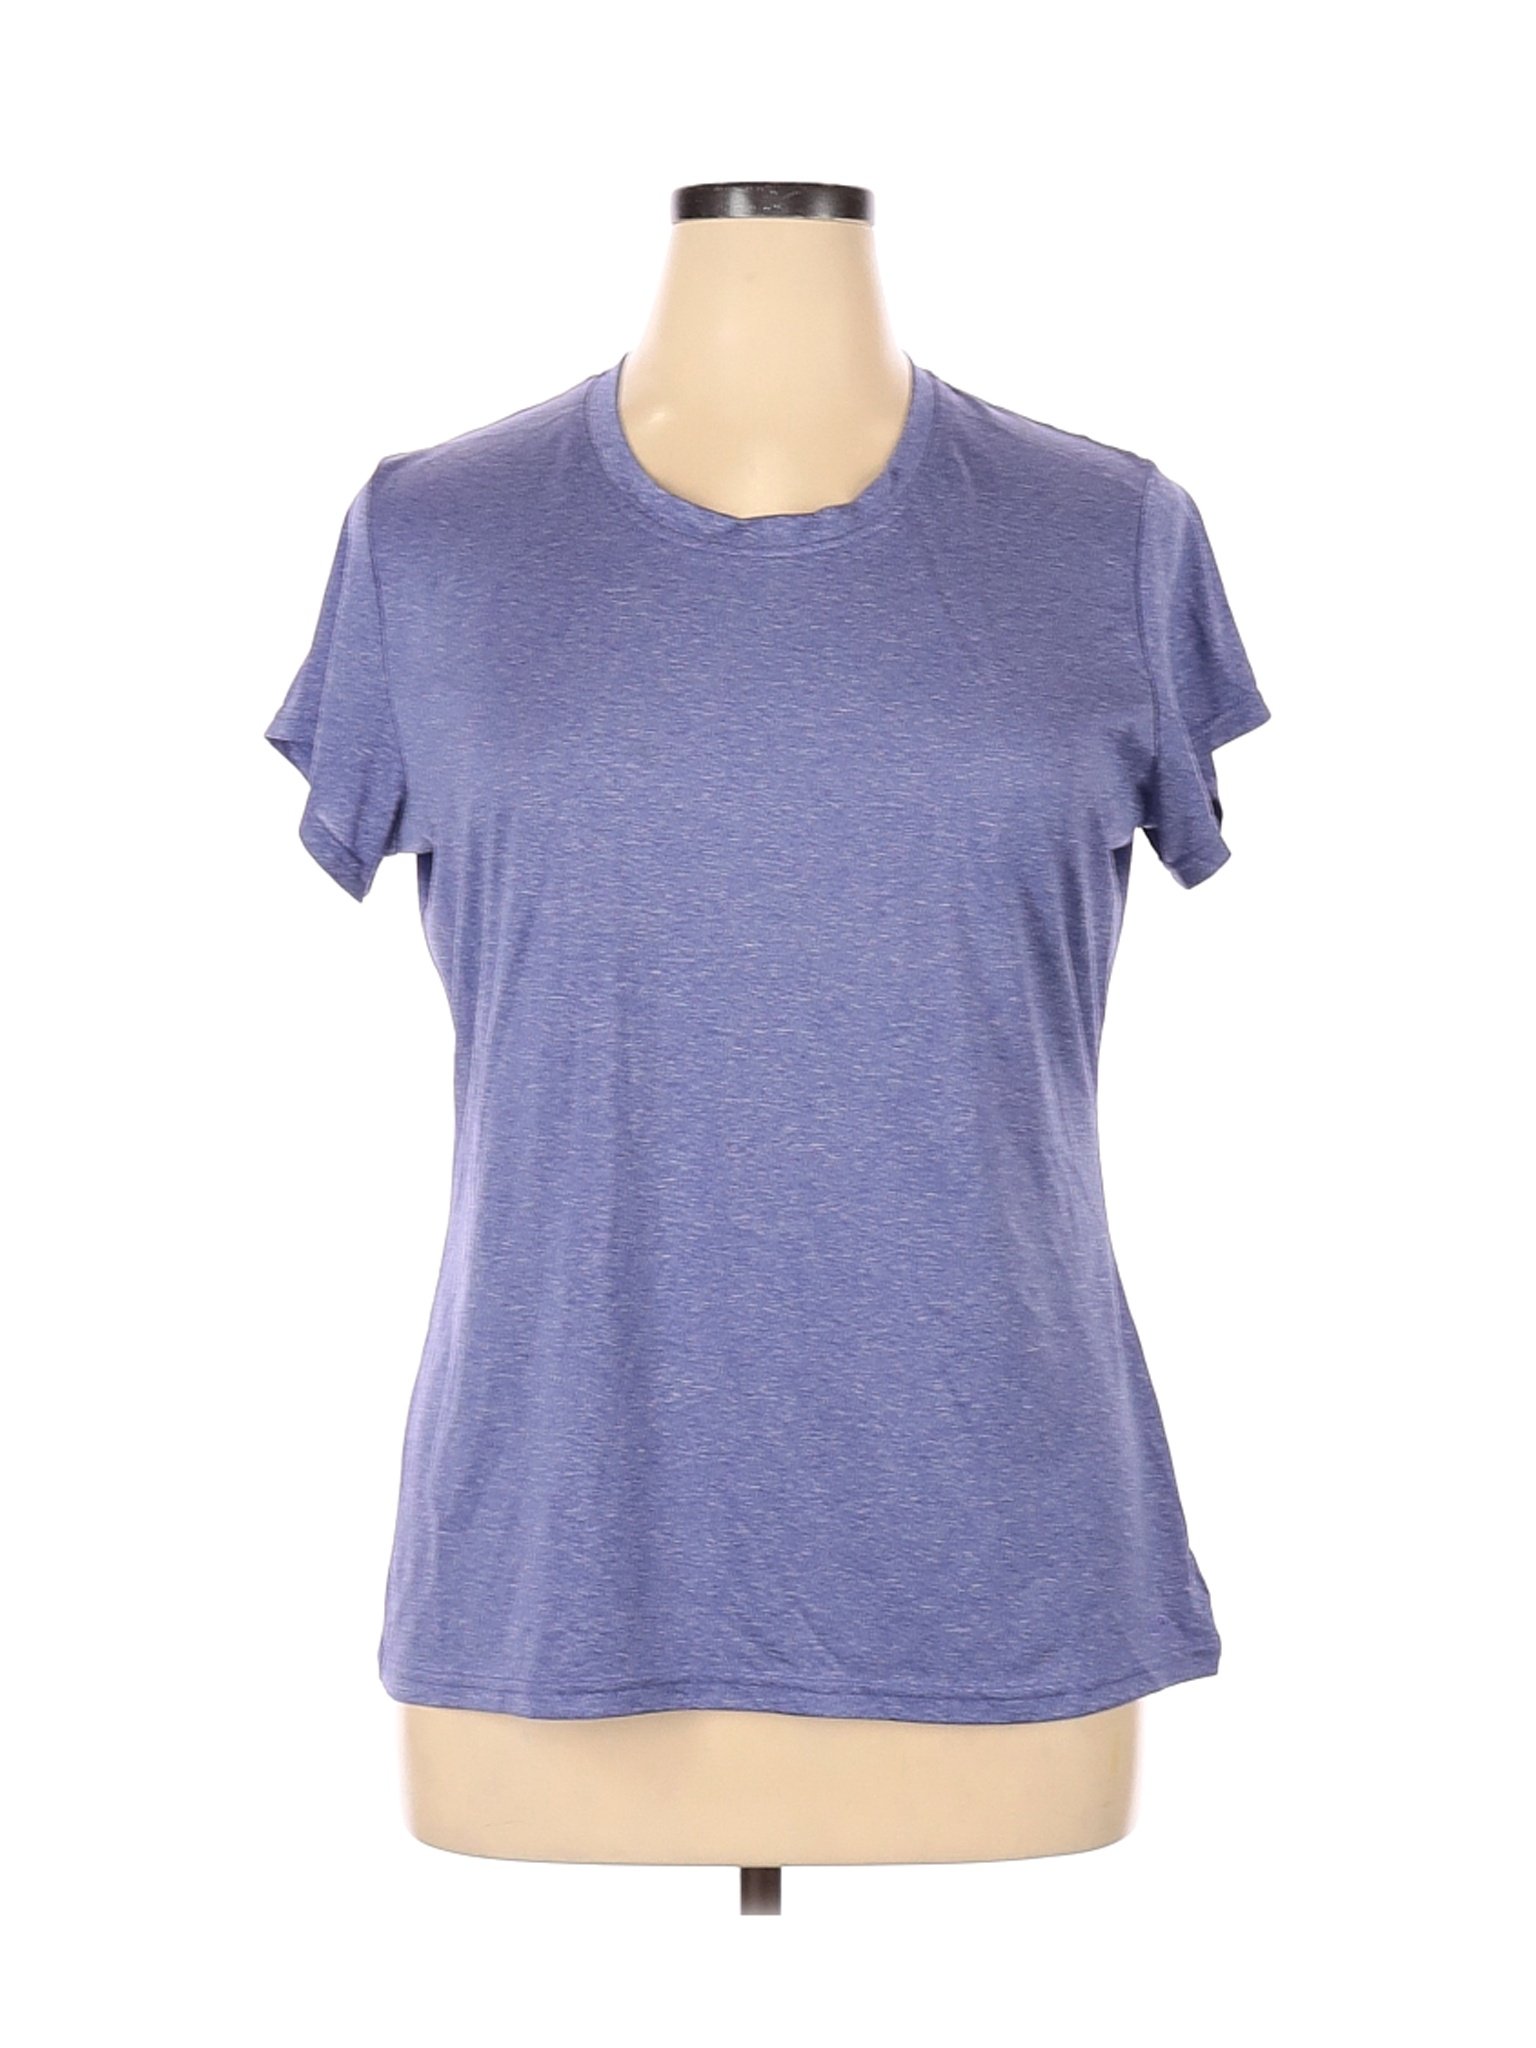 Champion Women Purple Short Sleeve T-Shirt XXL | eBay